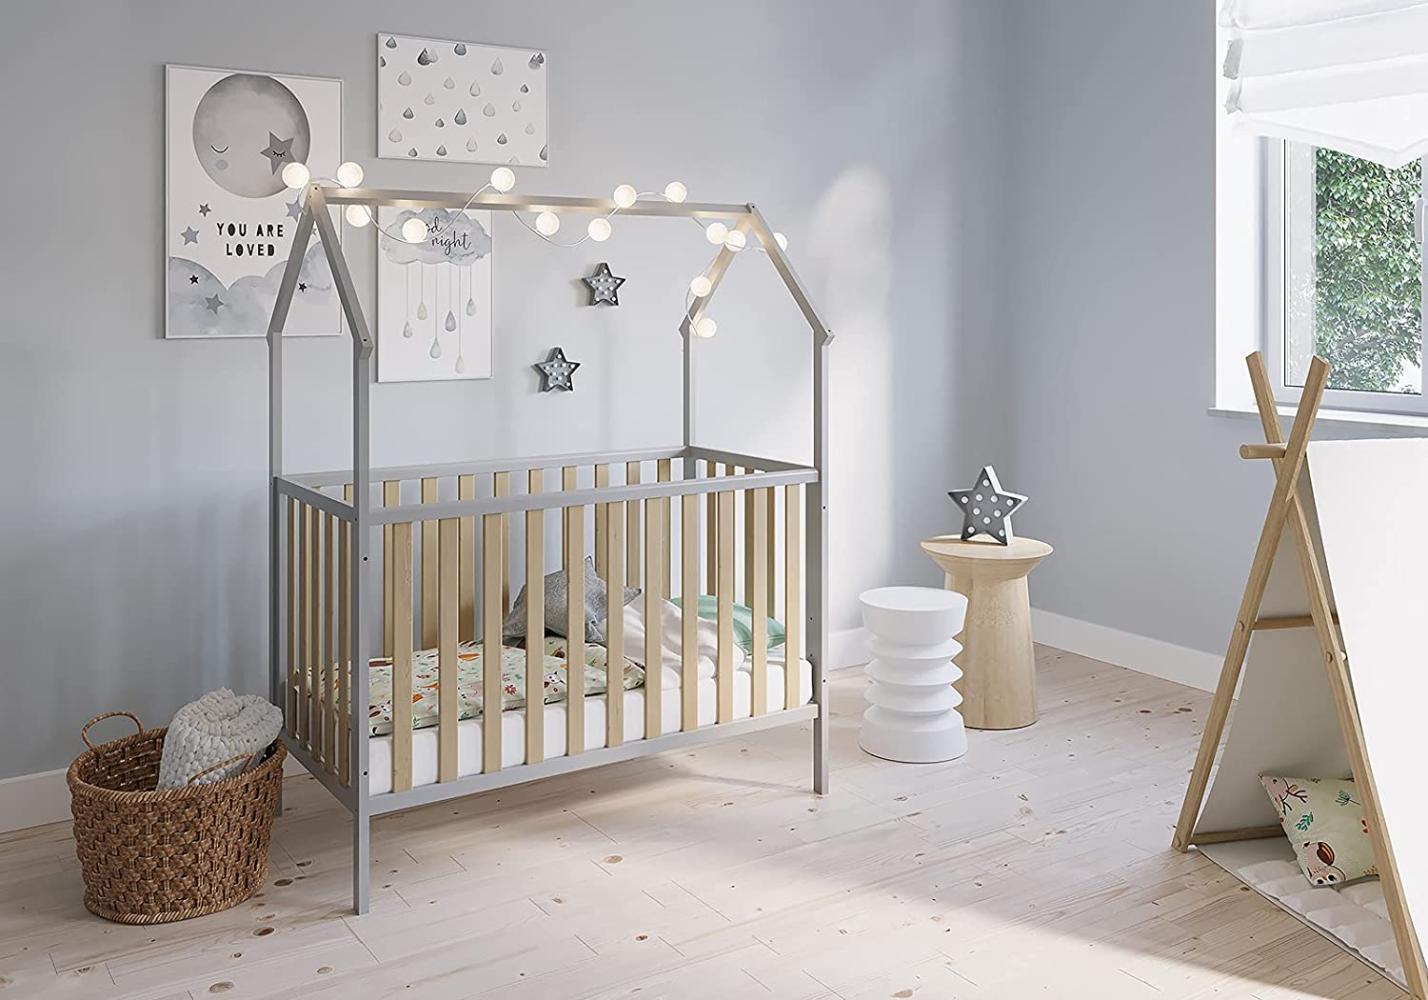 FabiMax 'Schlafmütze' Kinderbett, 60 x 120 cm, grau/natur, mit Matratze Classic, Kiefer massiv, 3-fach höhenverstellbar, umbaubar Bild 1